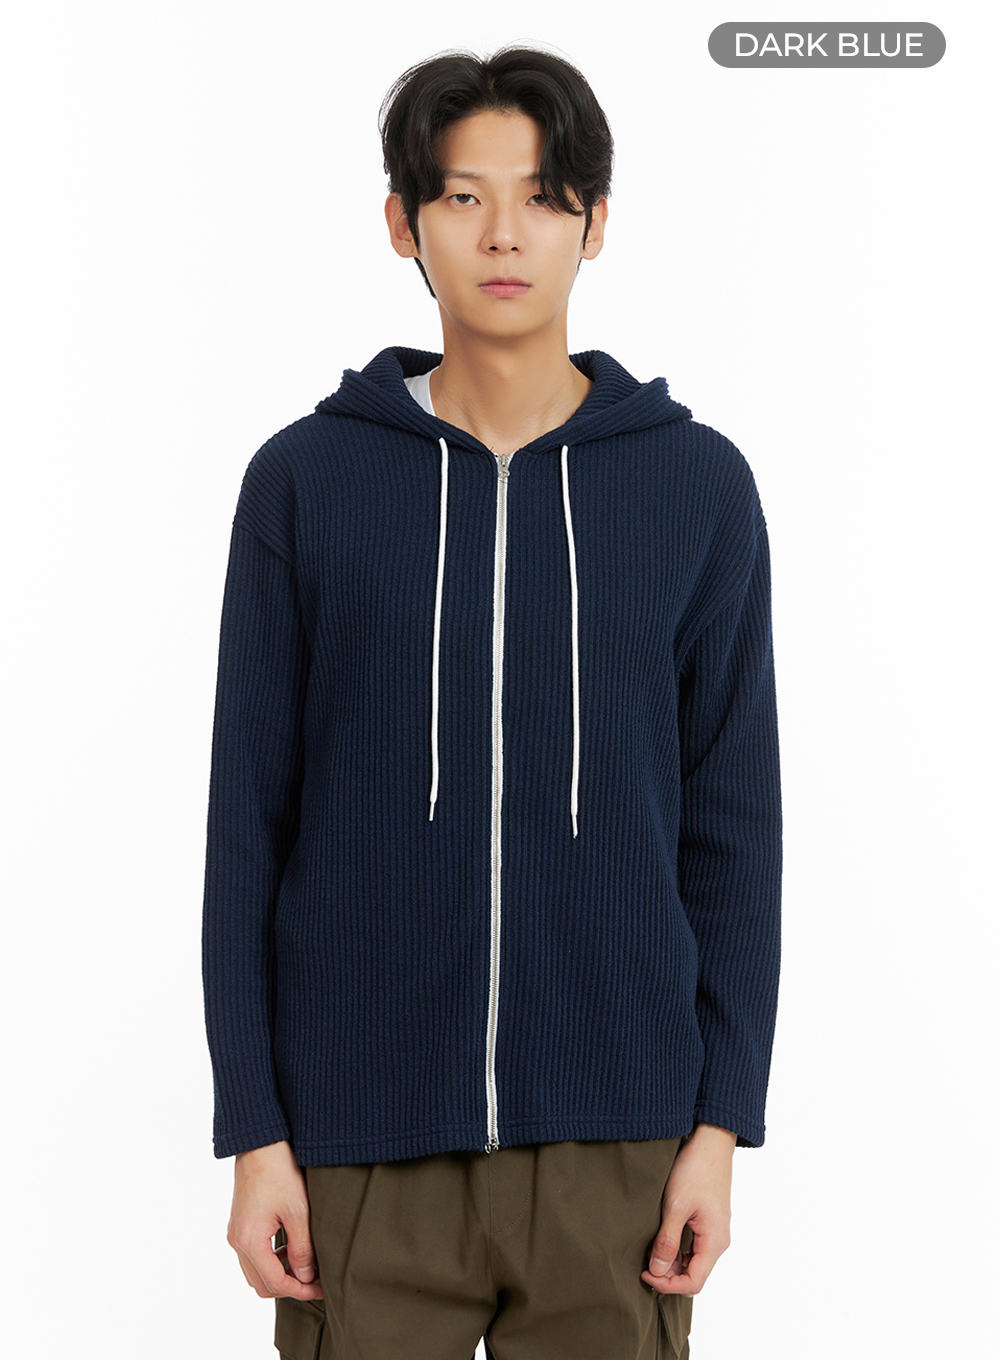 mens-zip-up-hooded-knit-sweater-ia402 / Dark blue